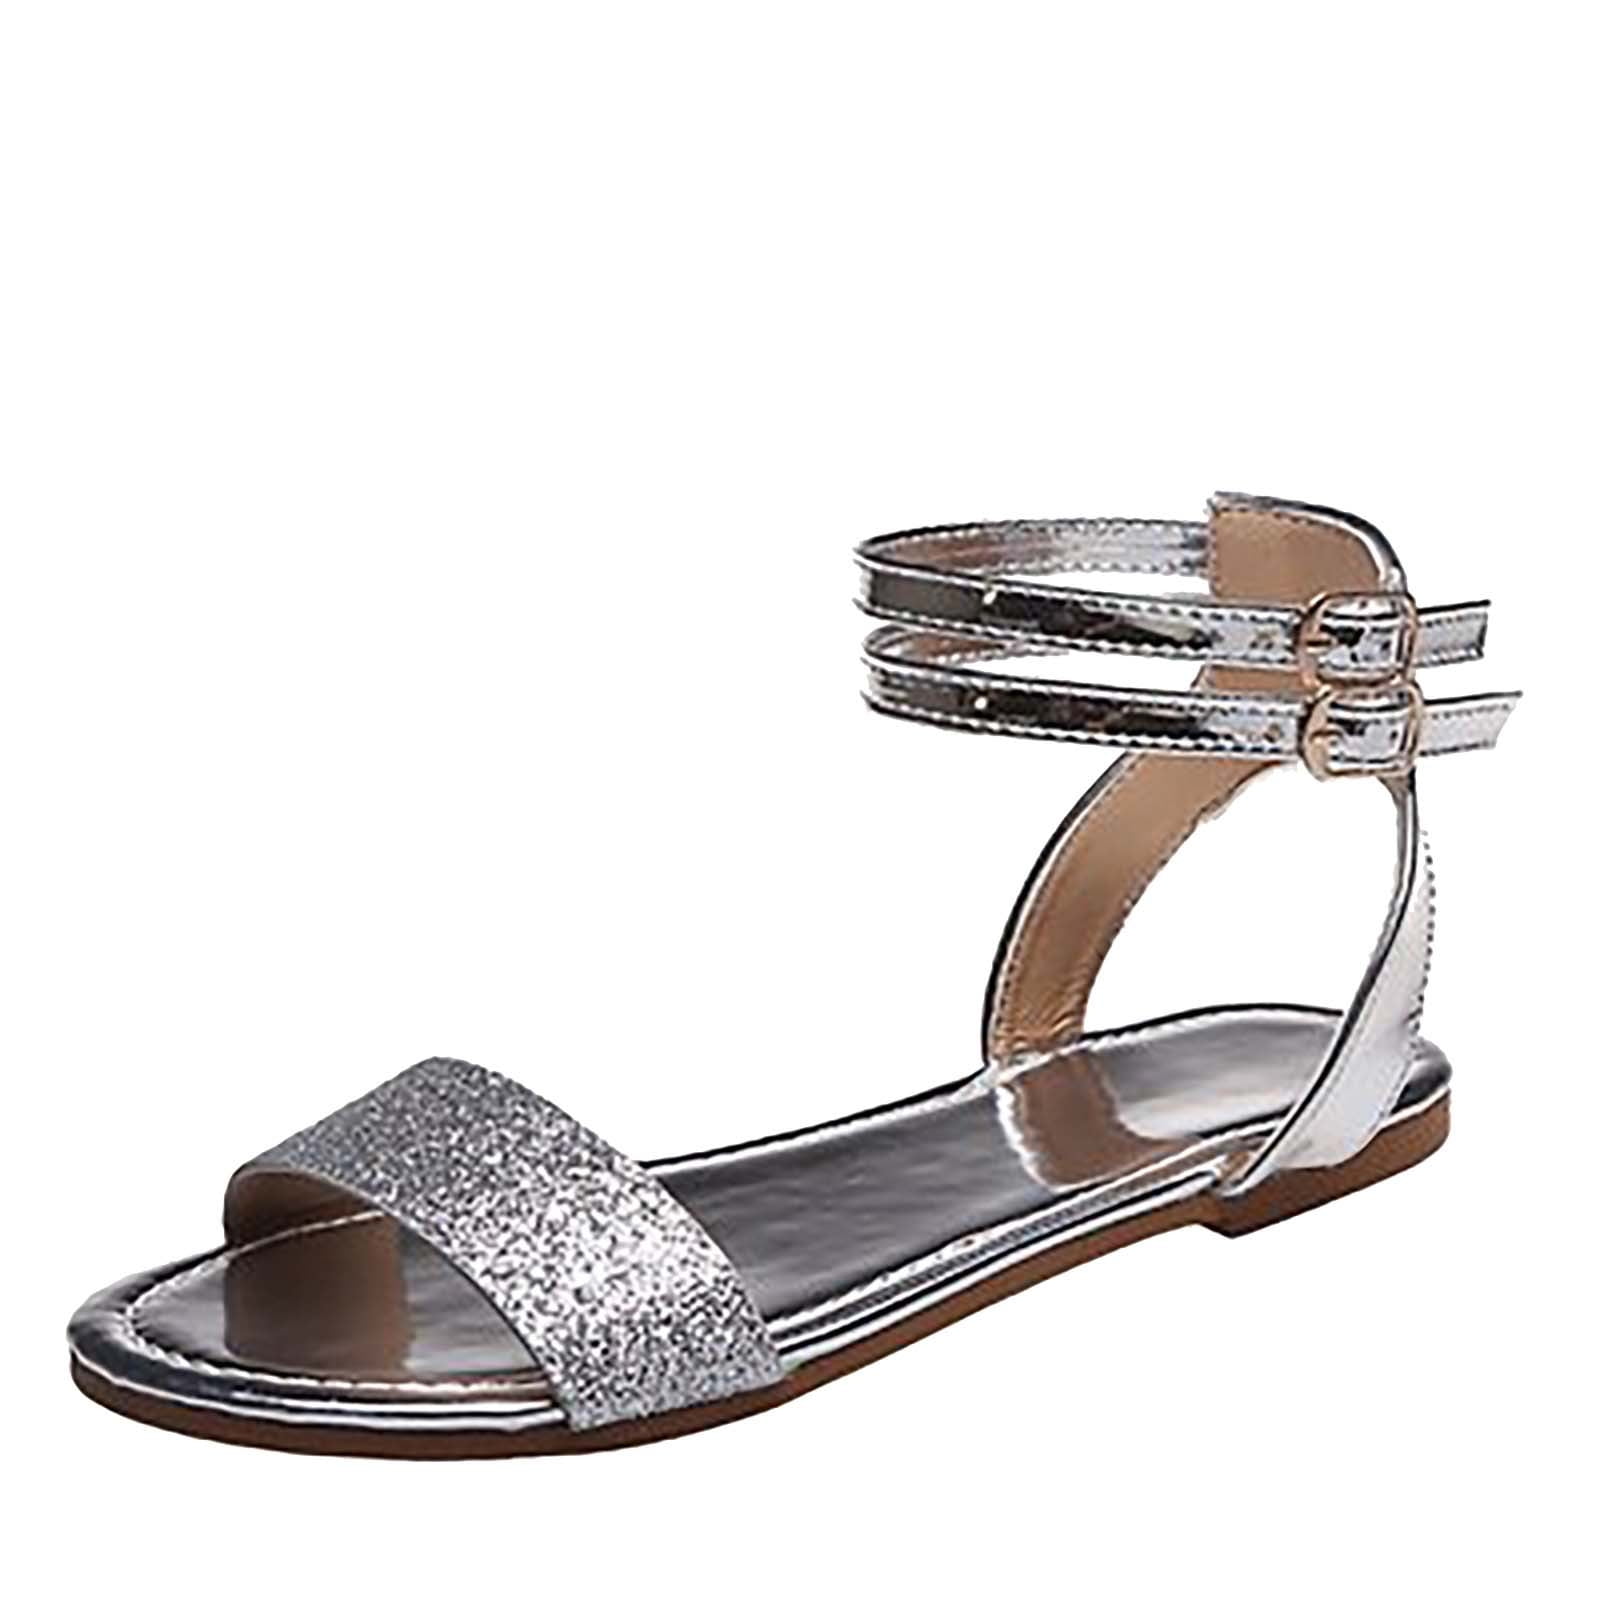 ladies diamante shoes Sandal House womens buckle glitter kitten heel casual new 